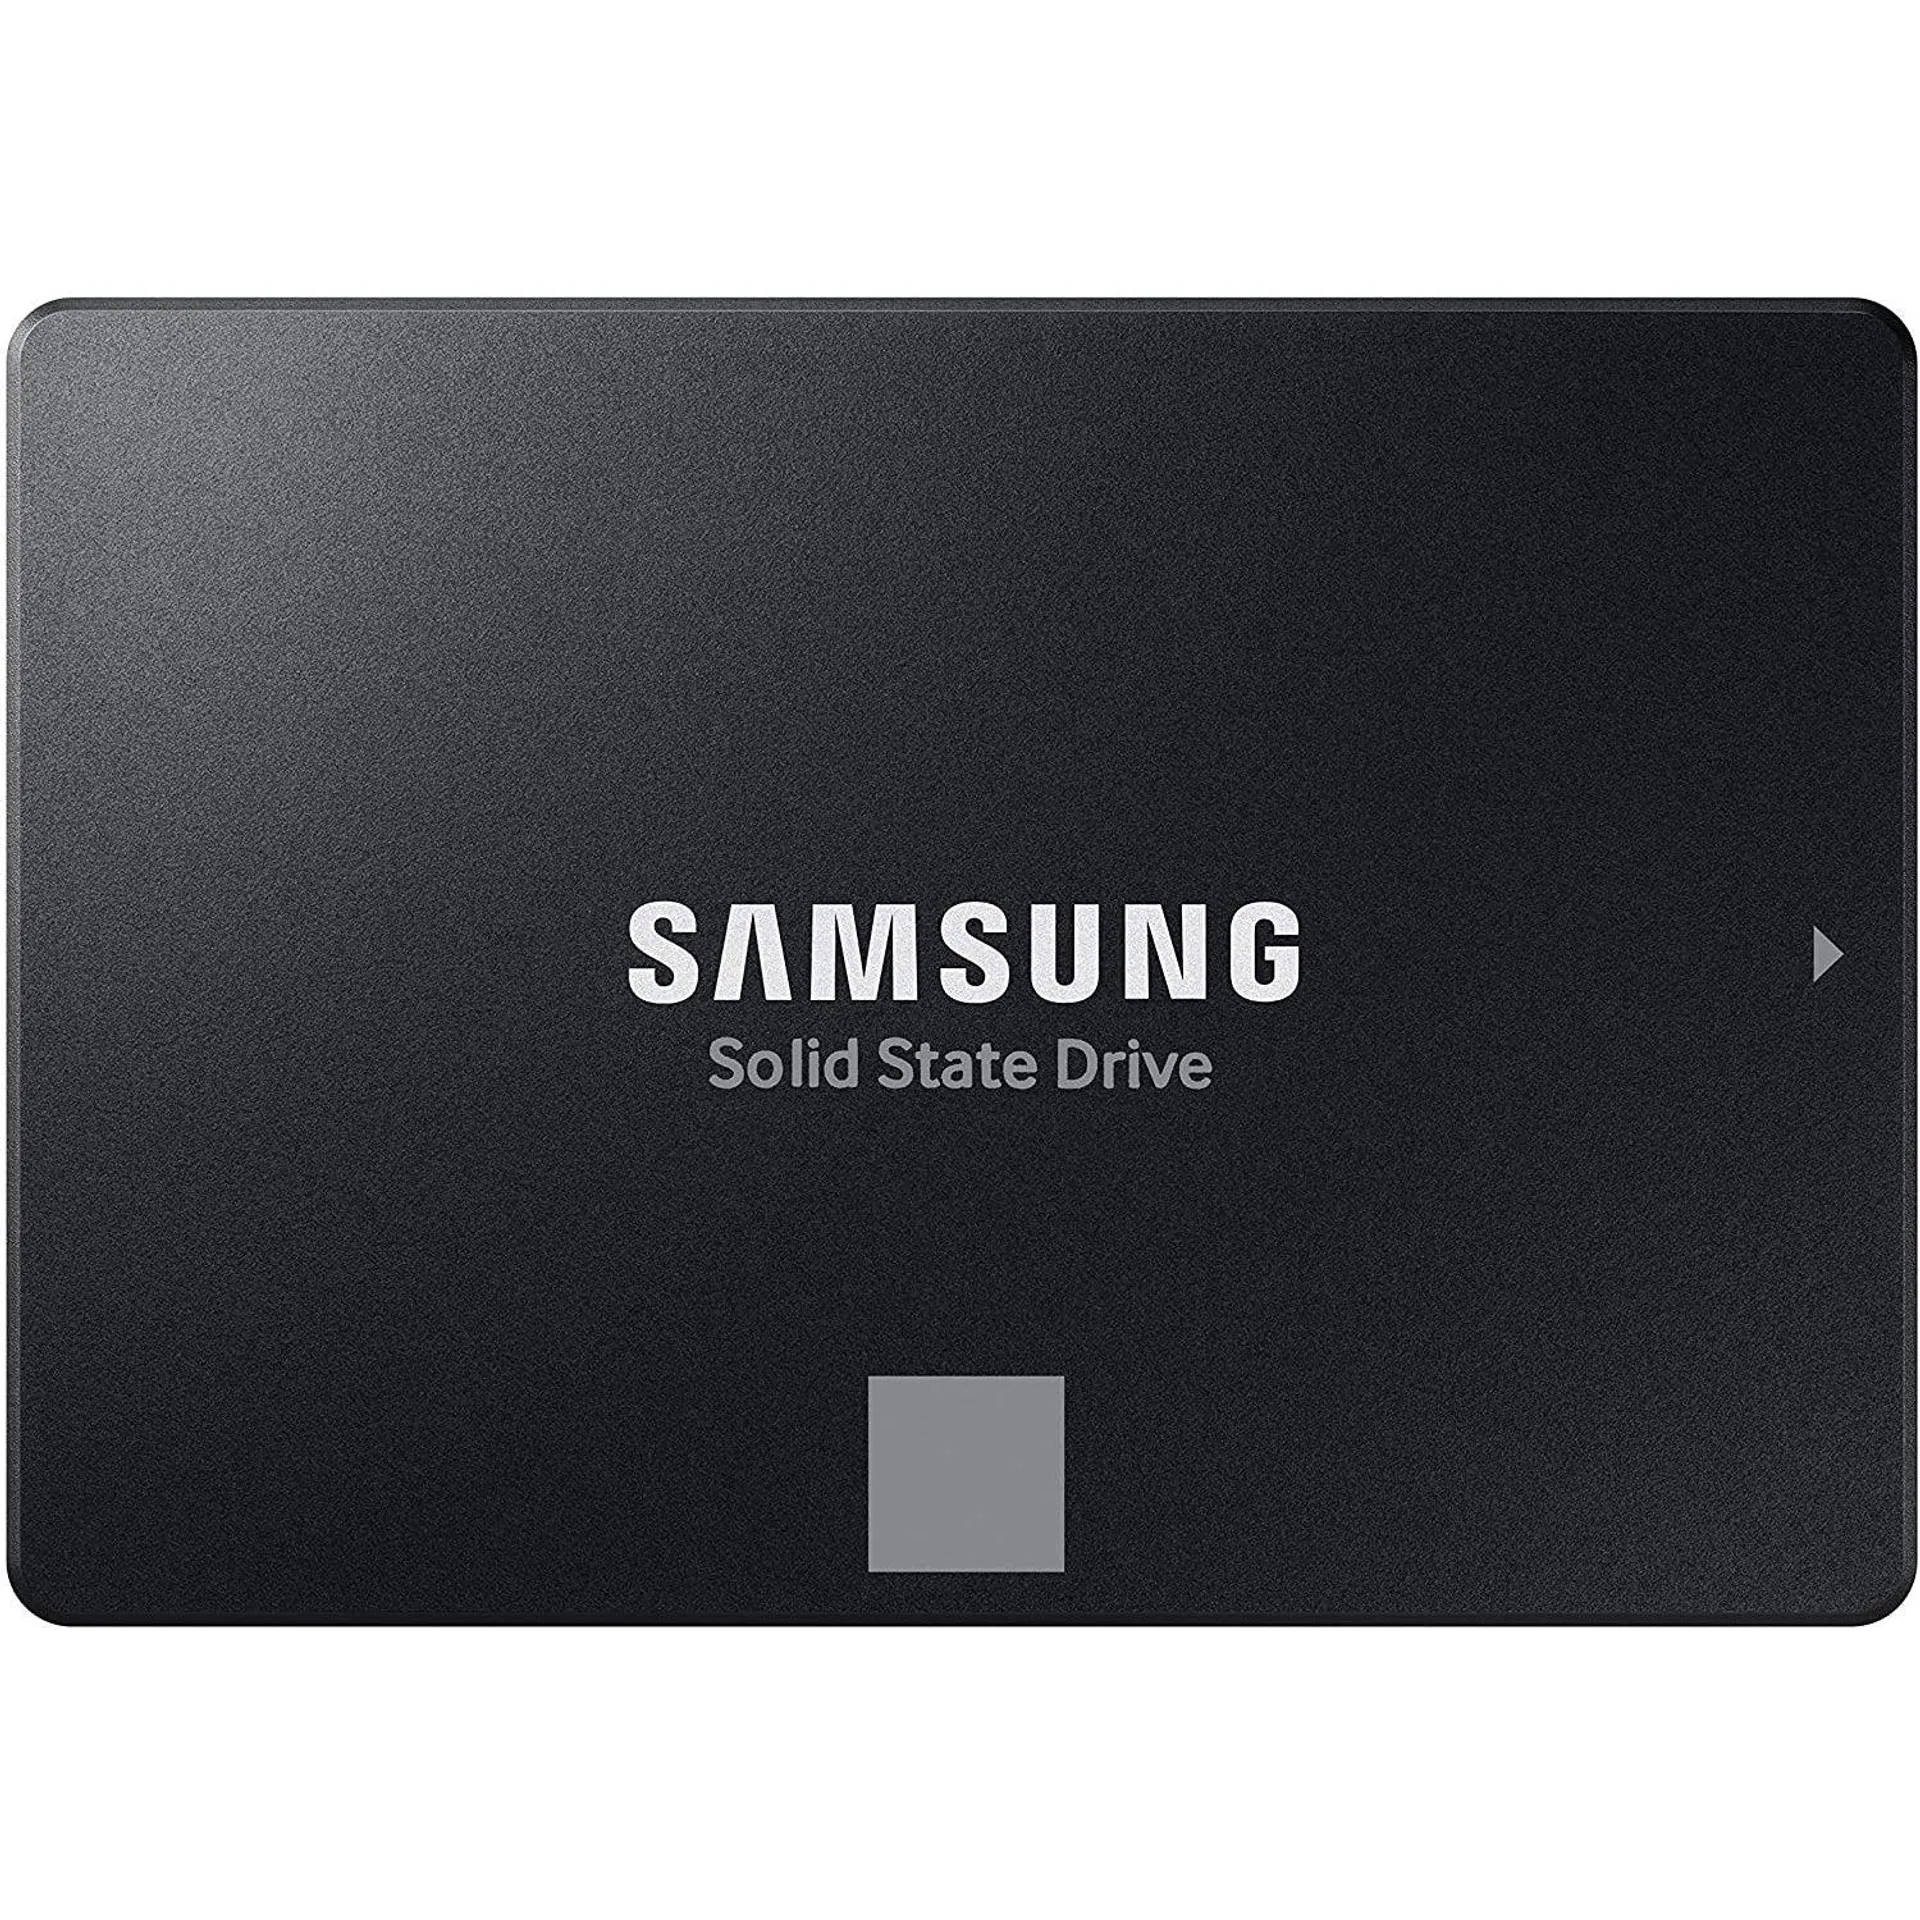 Samsung 870 EVO SATA 2.5-inch SSD, 2TB - MZ-77E2T0B/AM